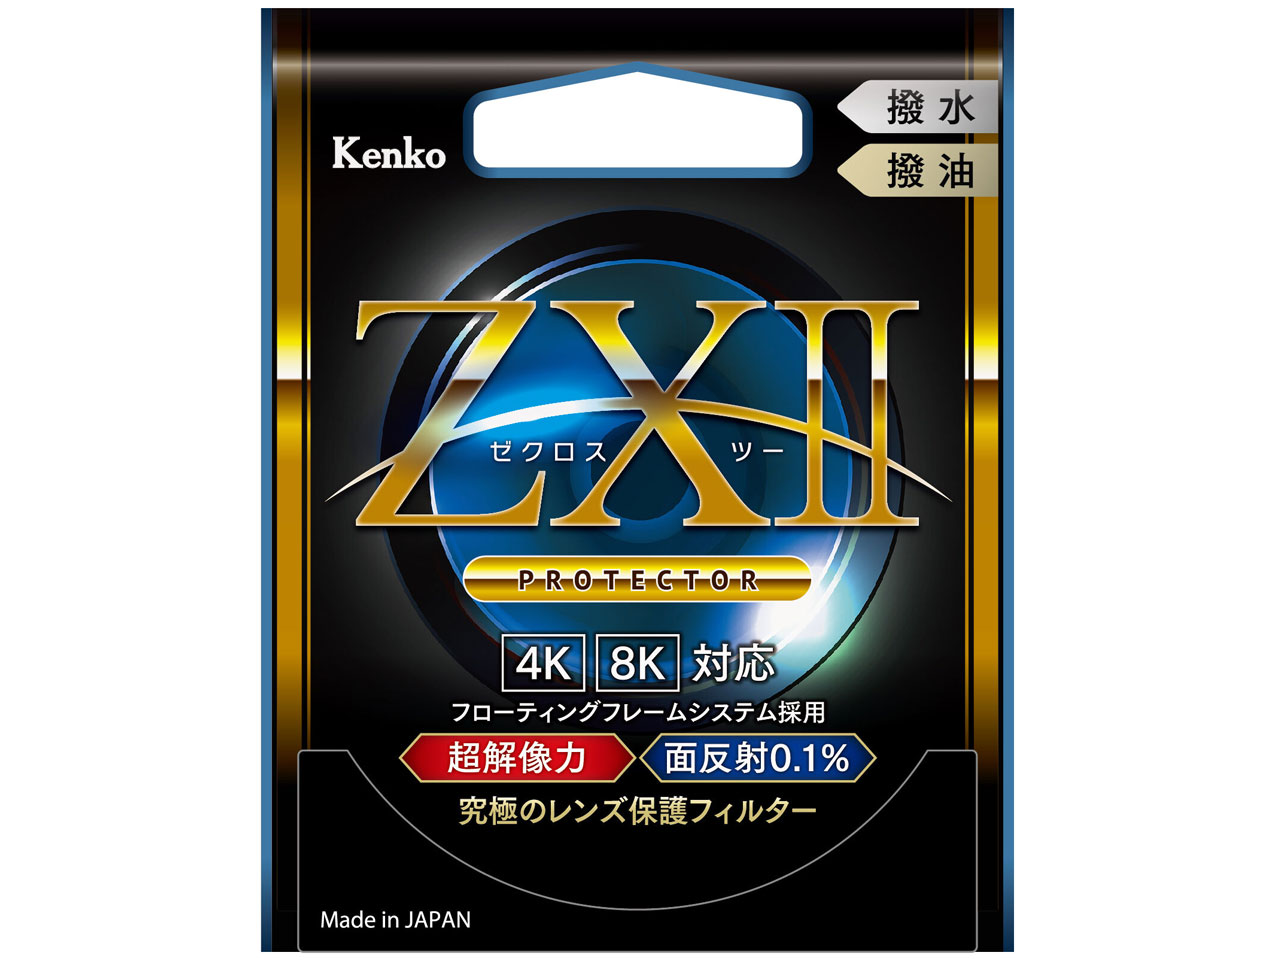 ZR01コート 爆安 採用で 面反射0.1％の超低反射を実現 新品 Kenko 高品質 ZXII プロテクター トキナー 代引き不可 ケンコー 49mm メール便 送料無料